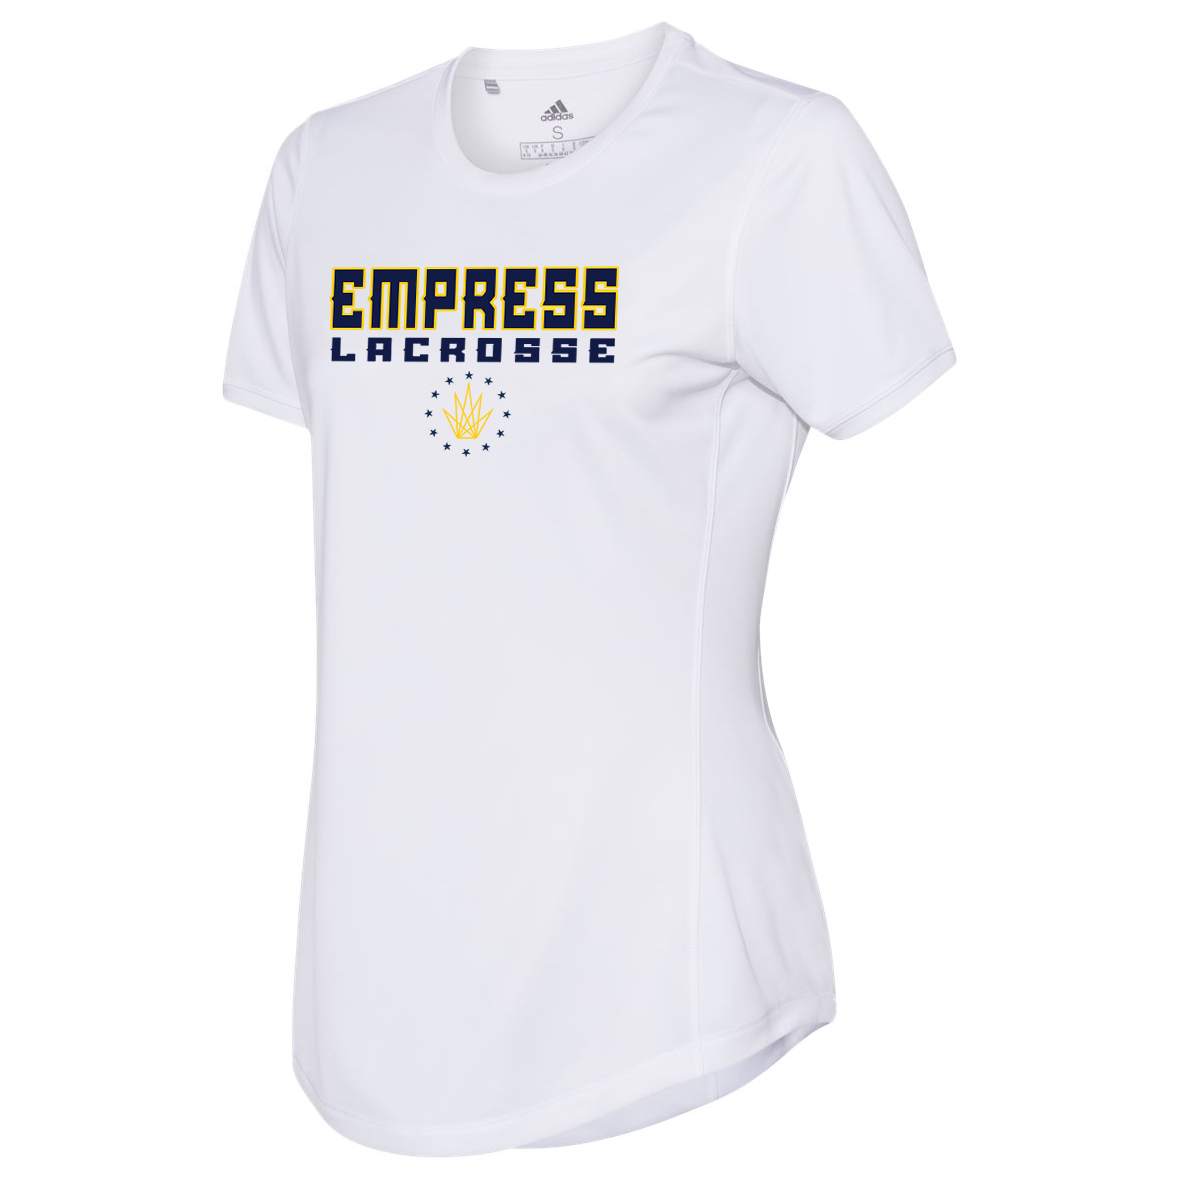 Empress Lacrosse Women's Adidas Sport T-Shirt